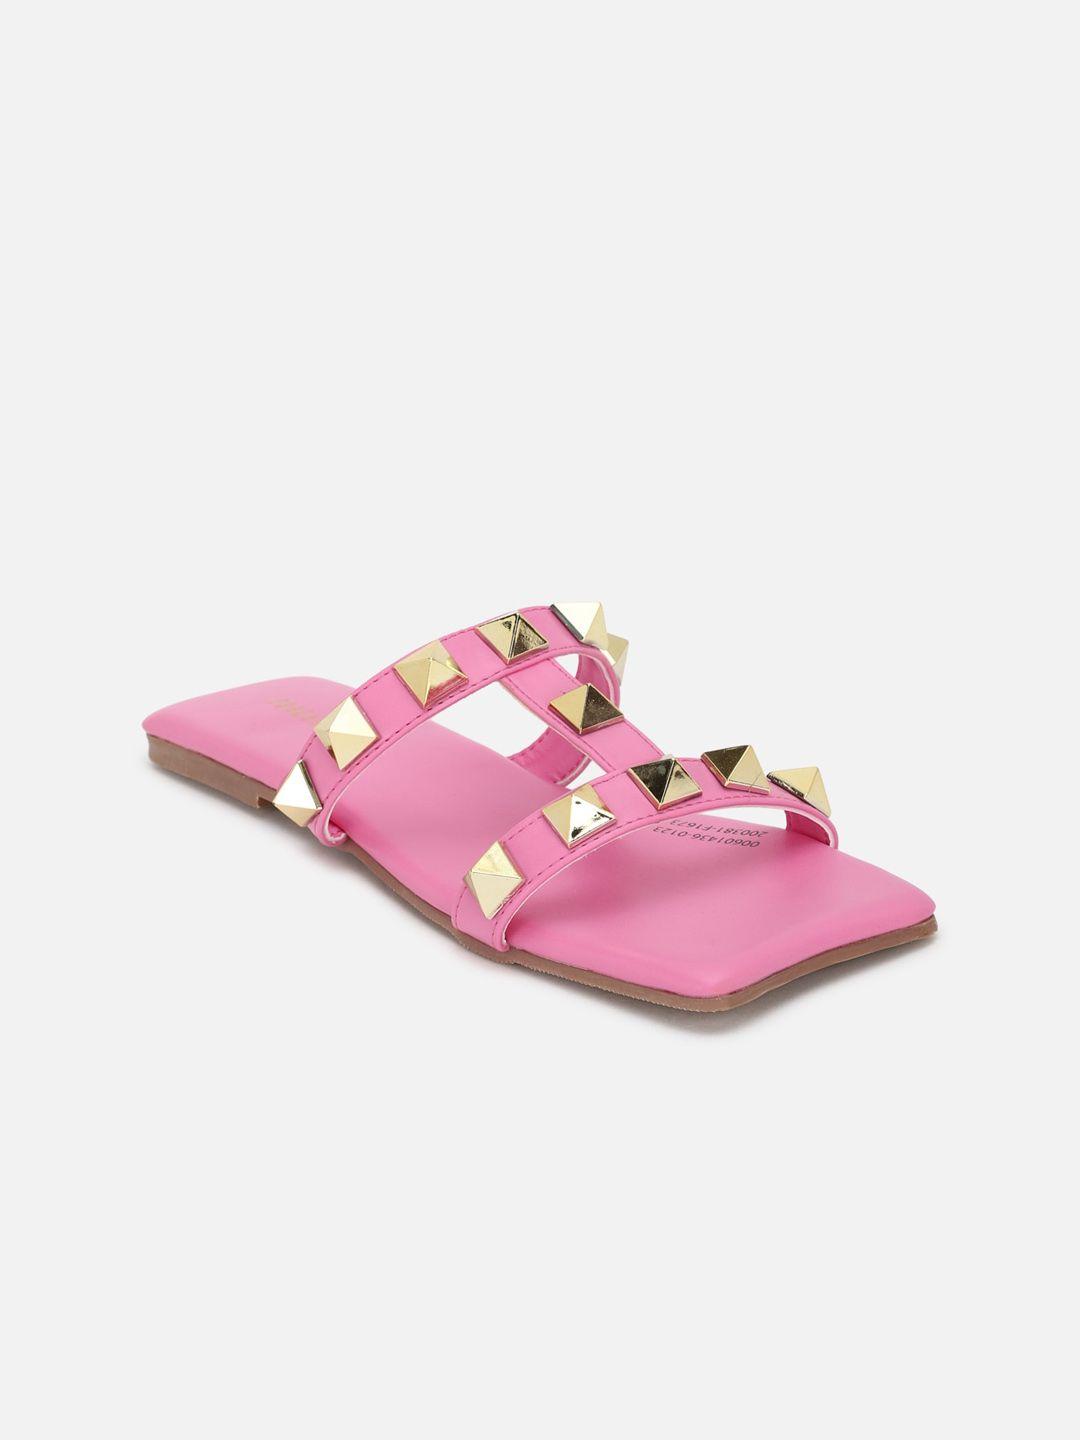 forever 21 pink & gold toned embellished open toe flats